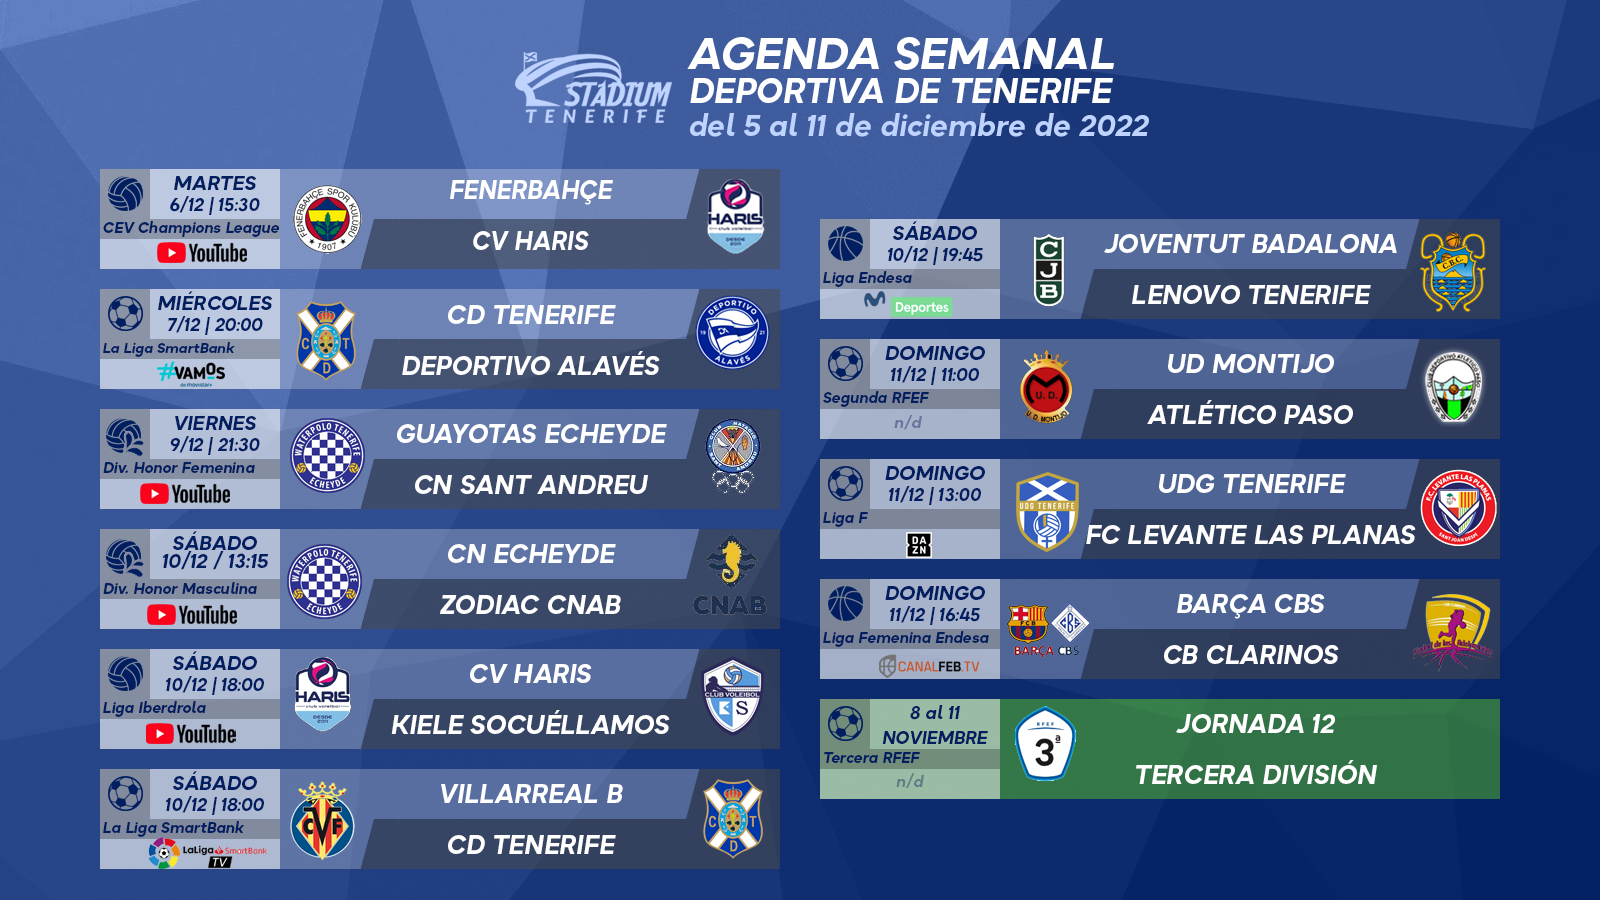 Agenda Semanal Deportiva de Tenerife (5 al 11 de diciembre)